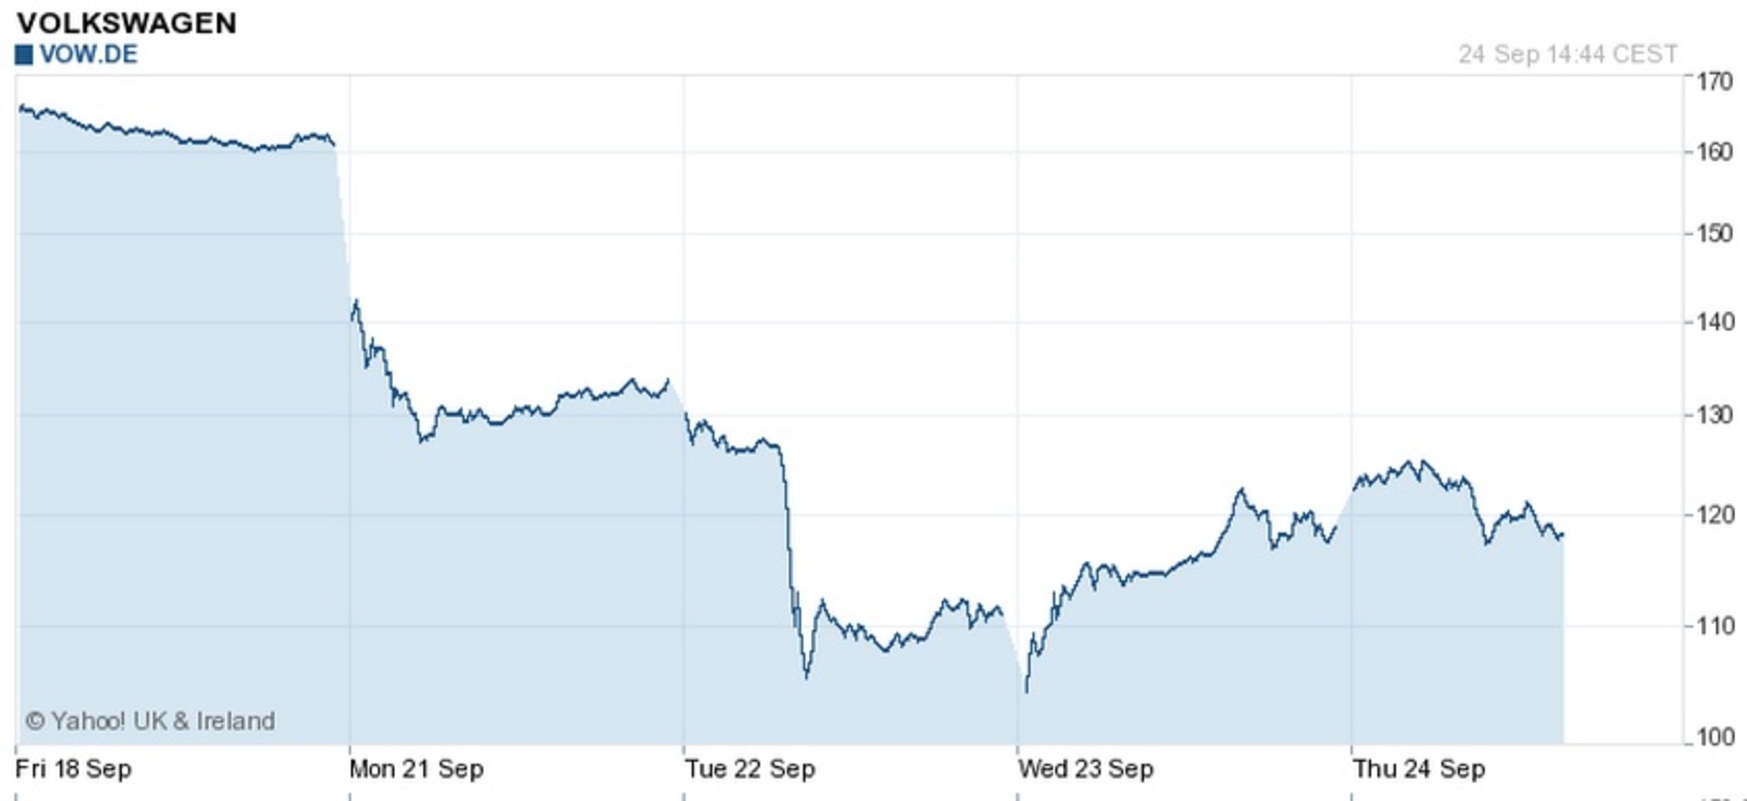 Yahoo Historical Stock Price Chart